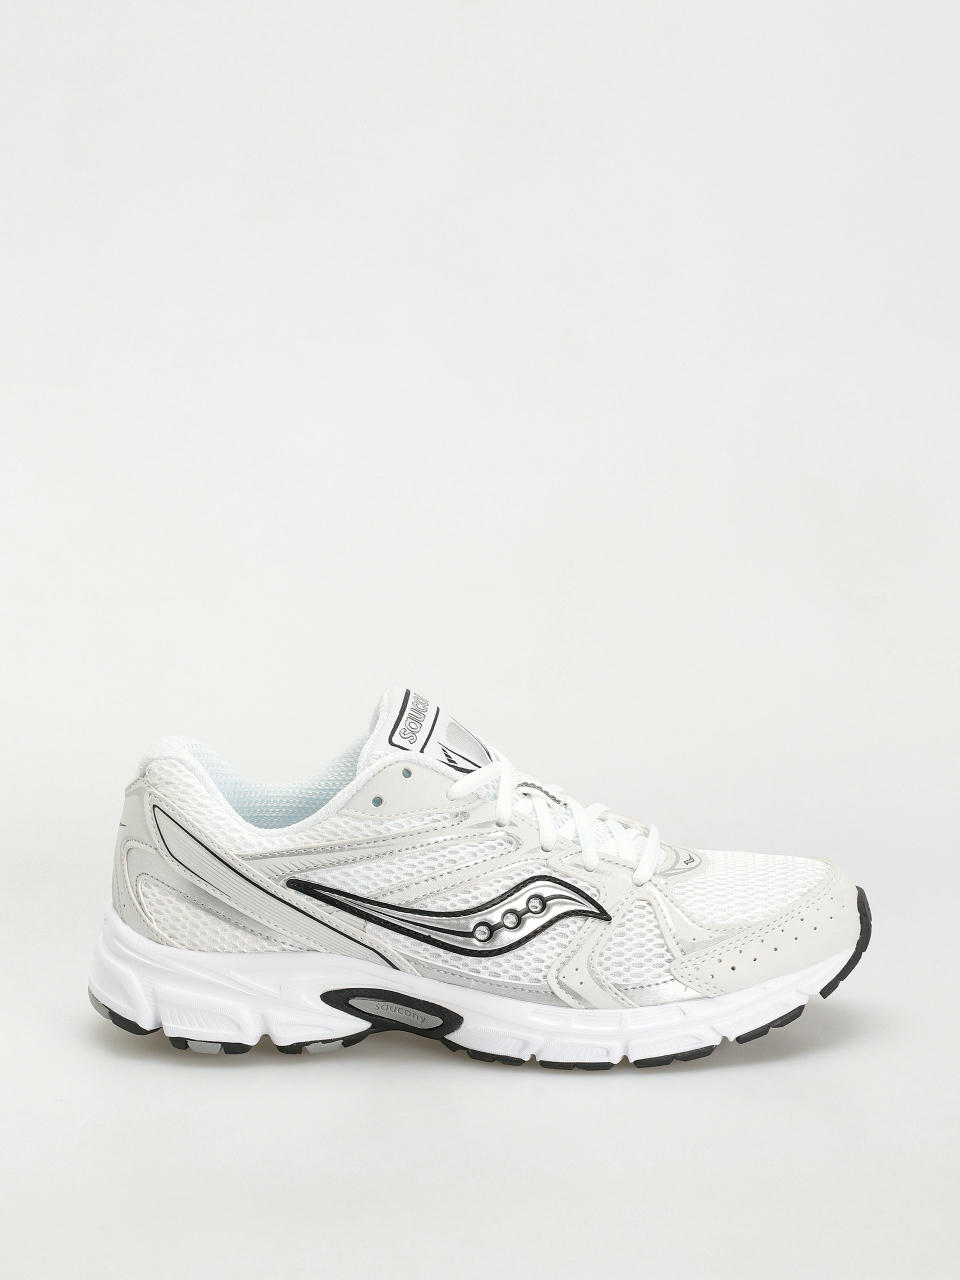 Saucony Grid Ride Millennium Schuhe (white/silver)